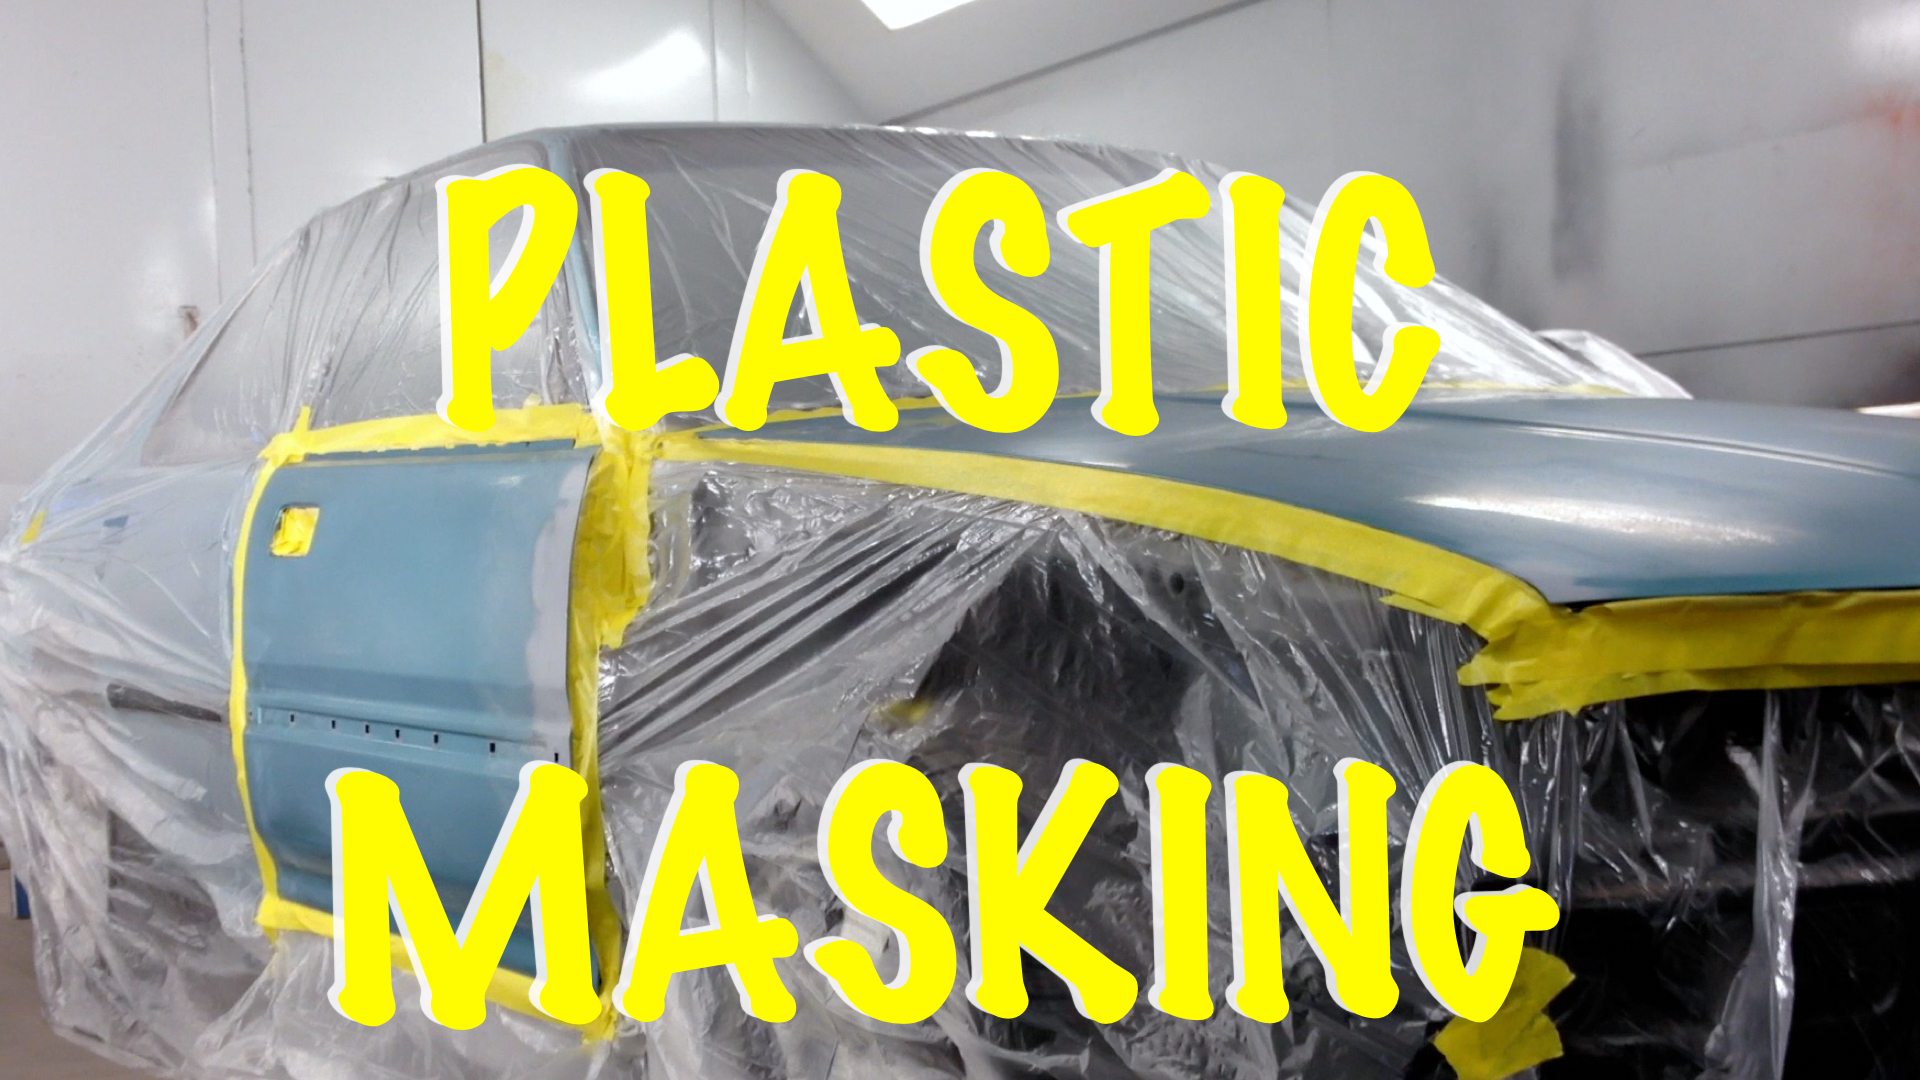 plastic-masking-pic-001